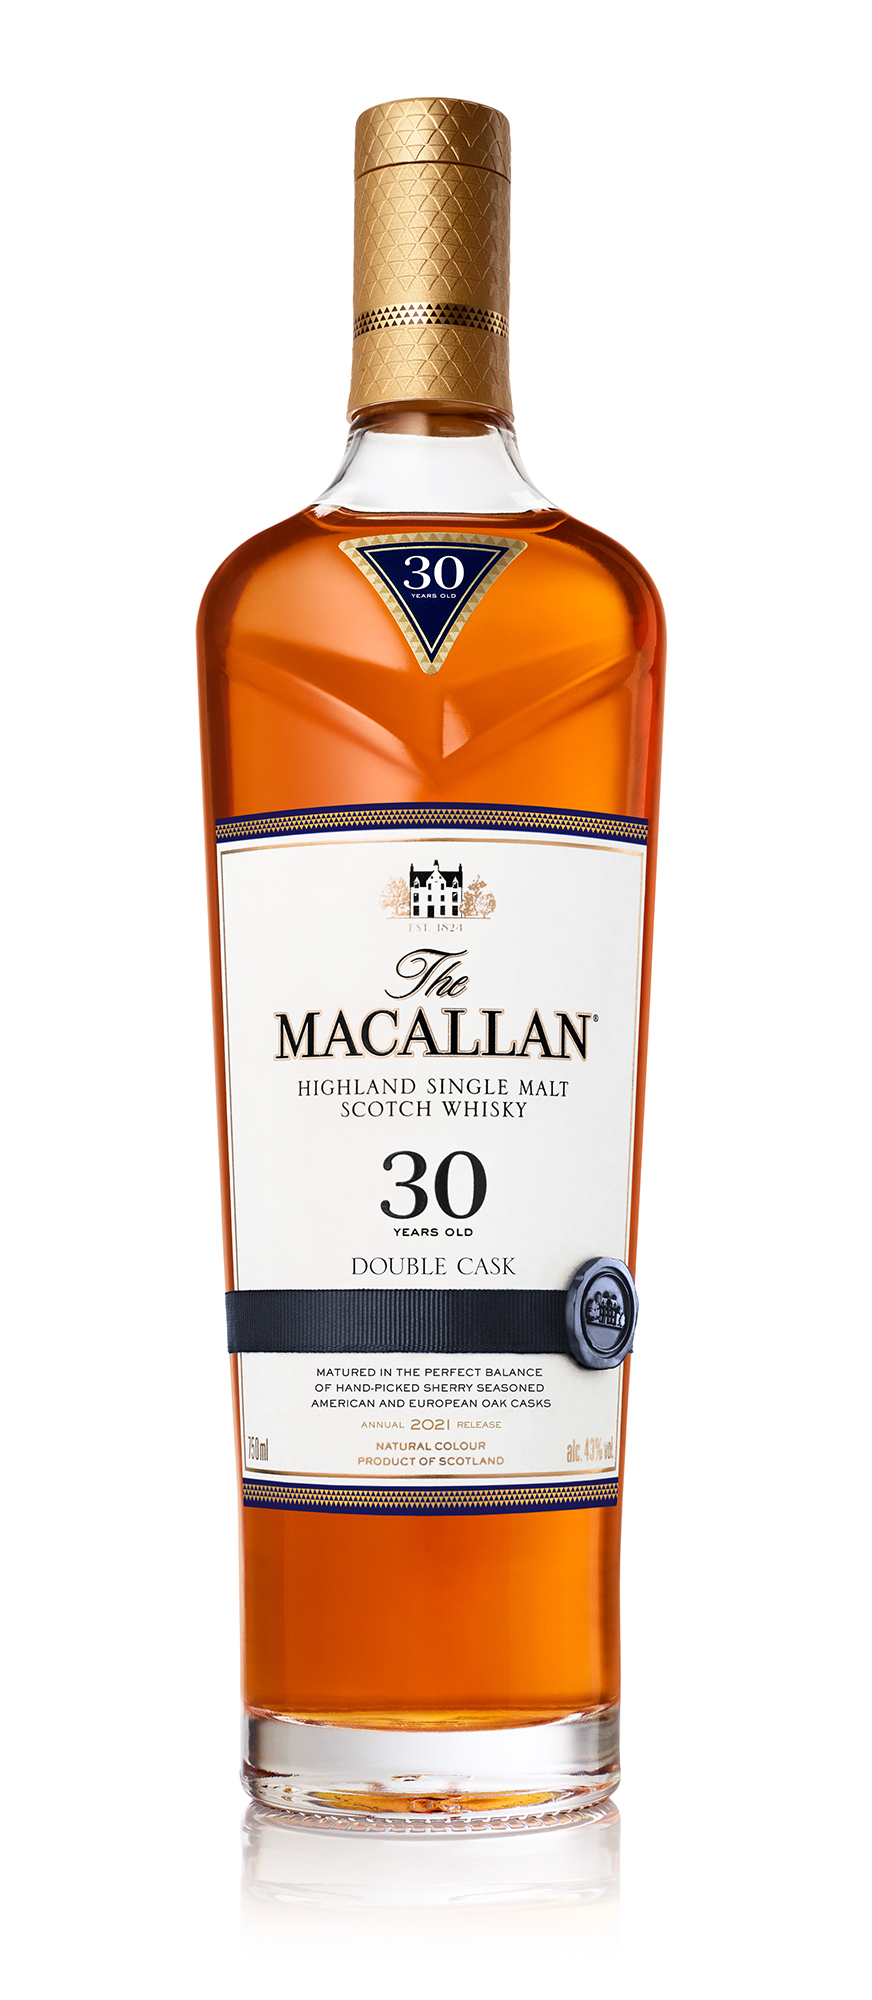 Macallan Double Cask 30 Years Old bottle